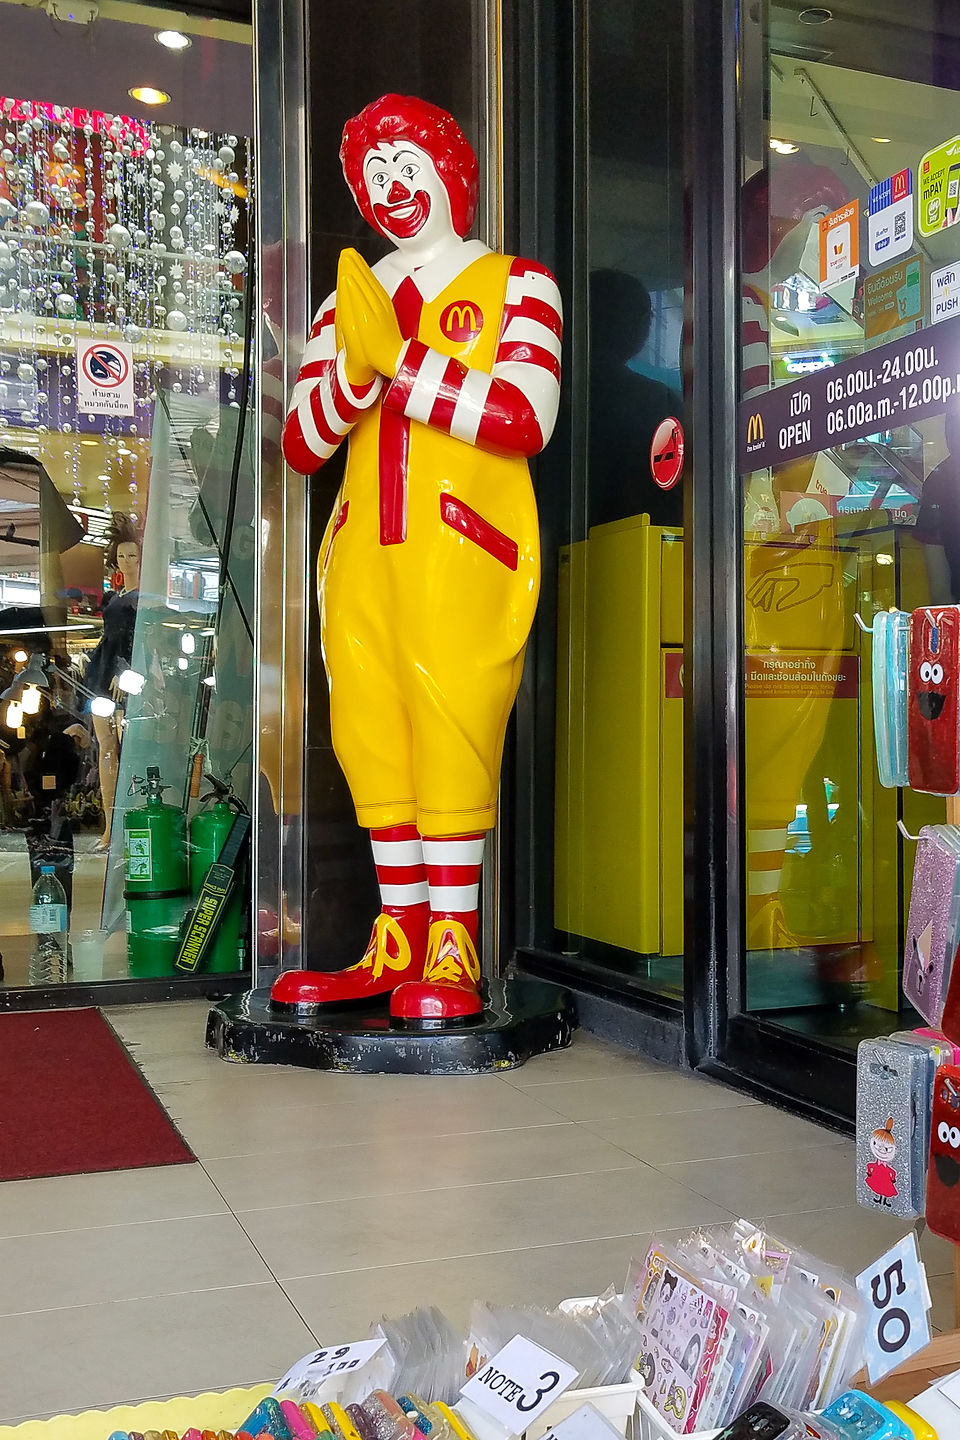 Ronald in Thai greeting pose